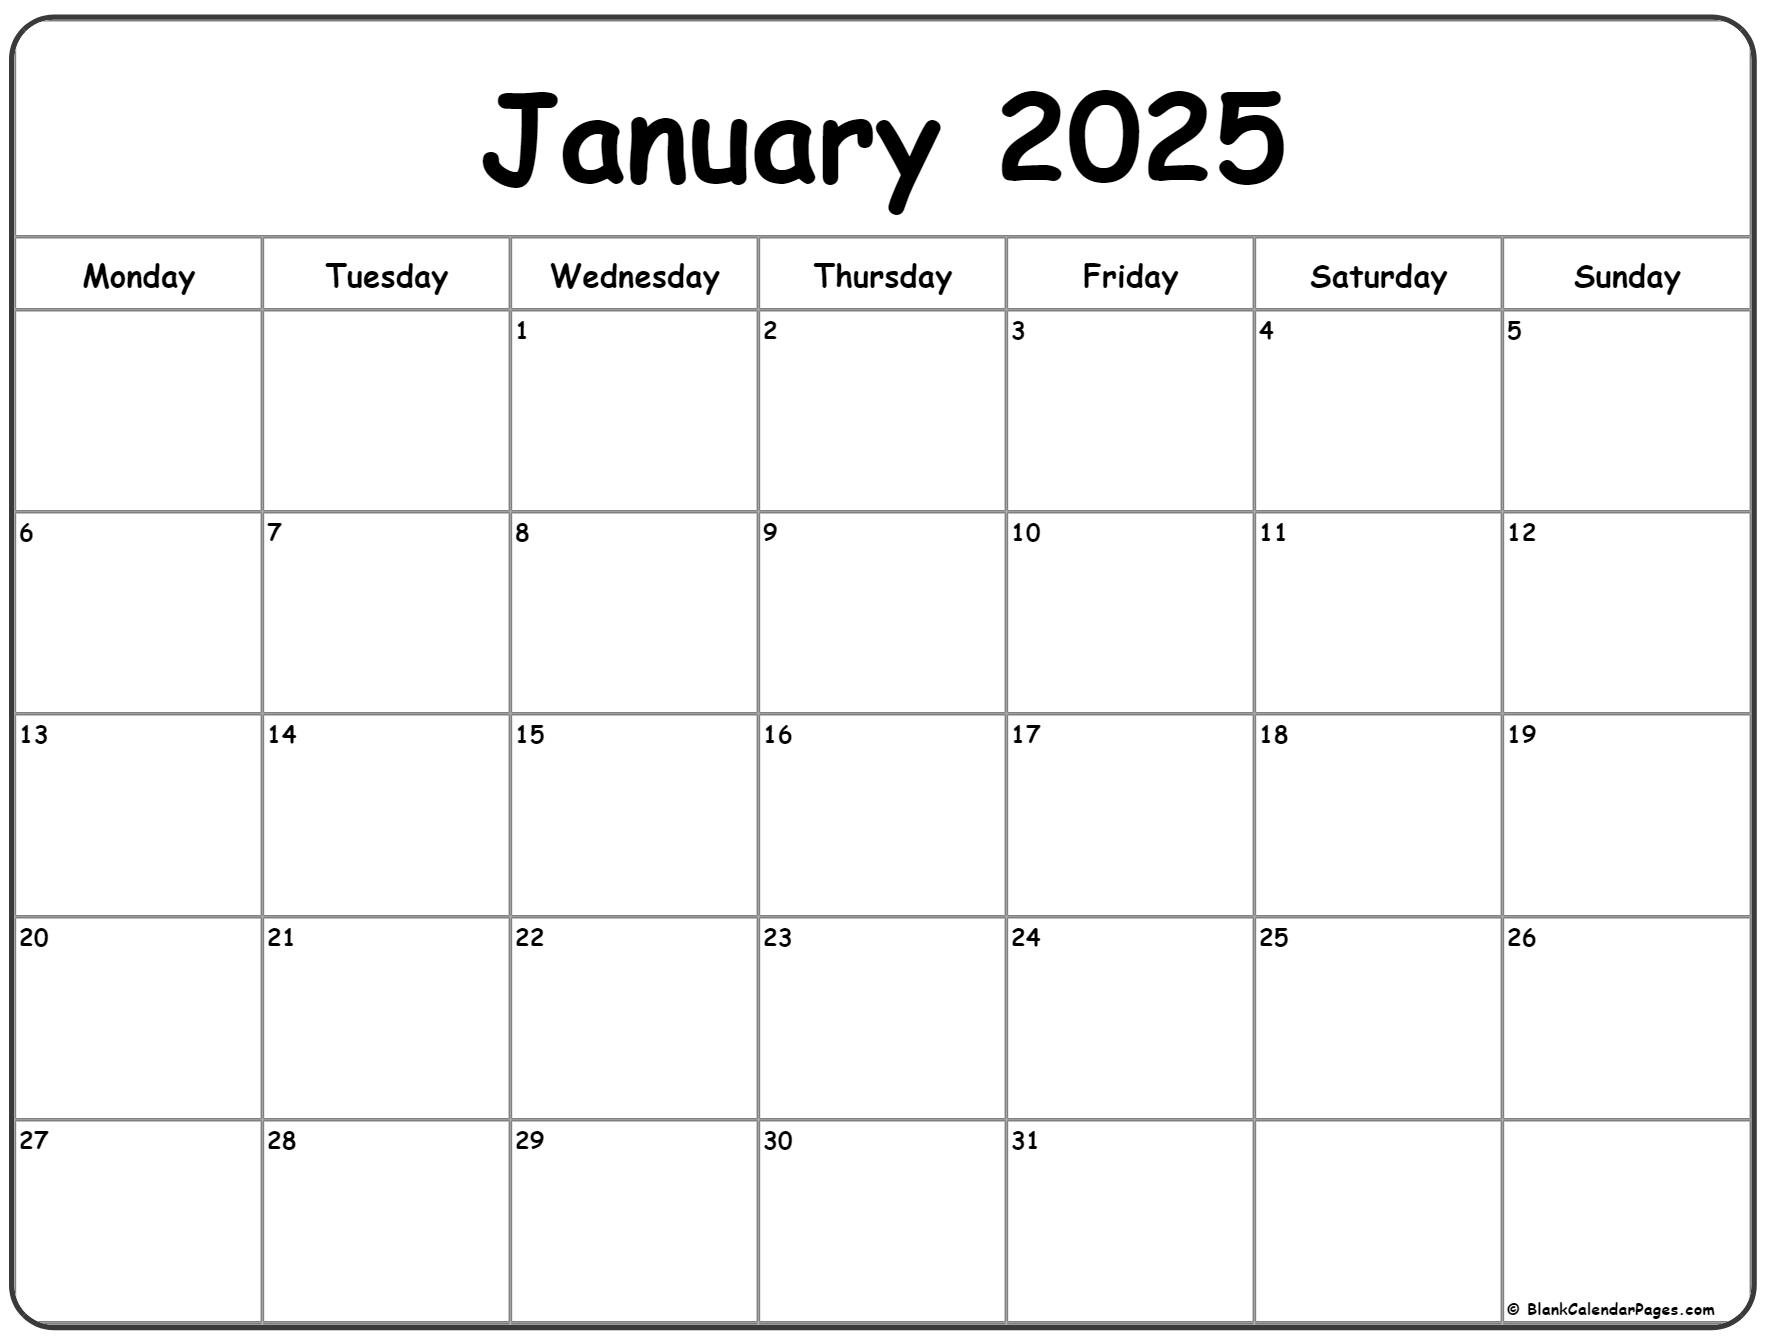 January 2025 Monday calendar. Monday to Sunday